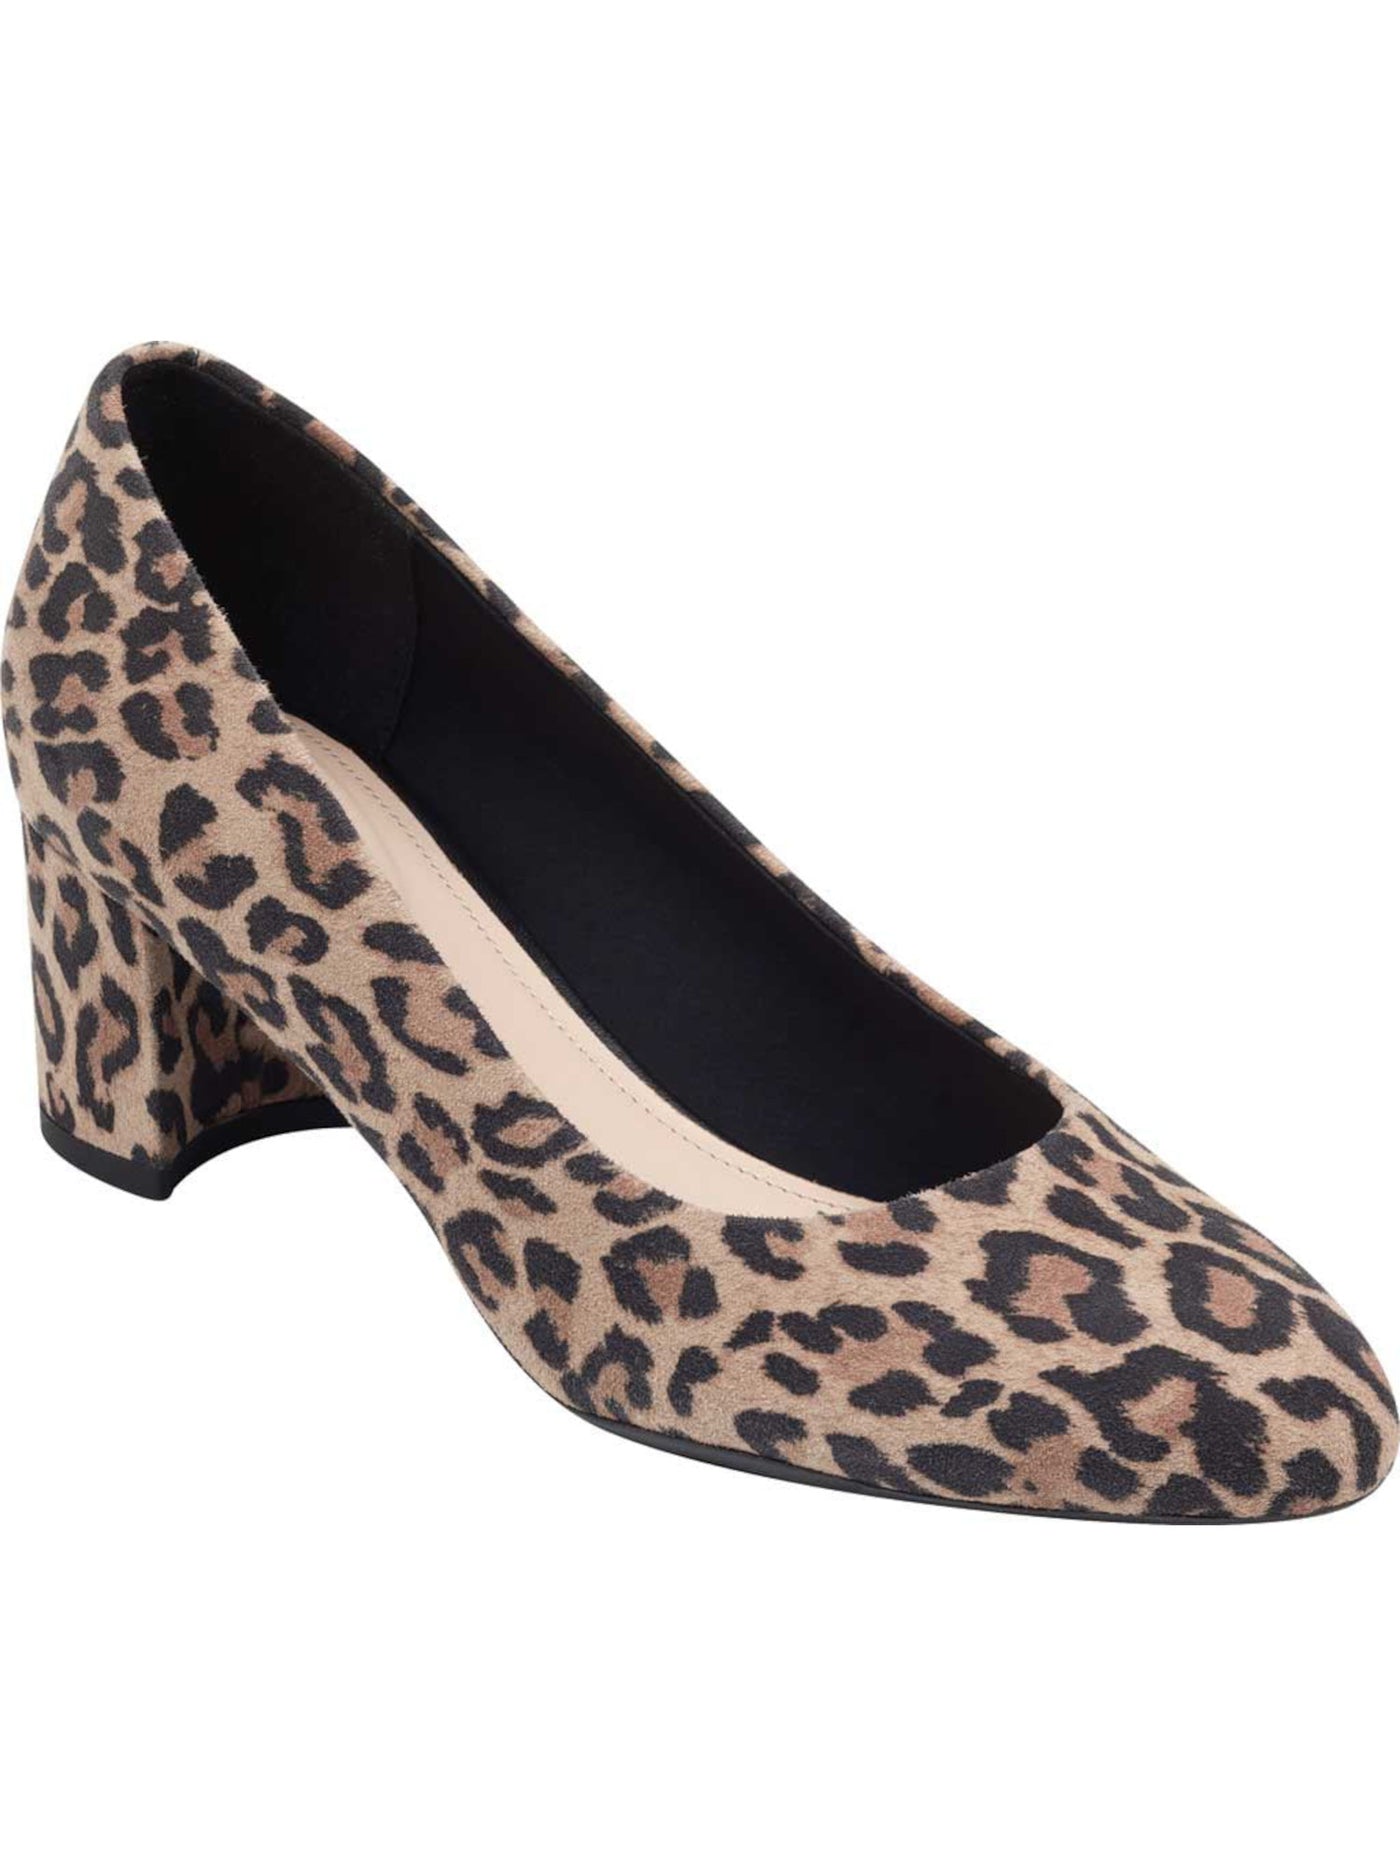 EVOLVE Womens Beige Leopard Print Traction Comfort Cushioned Robin Almond Toe Block Heel Slip On Leather Dress Pumps 7.5 M